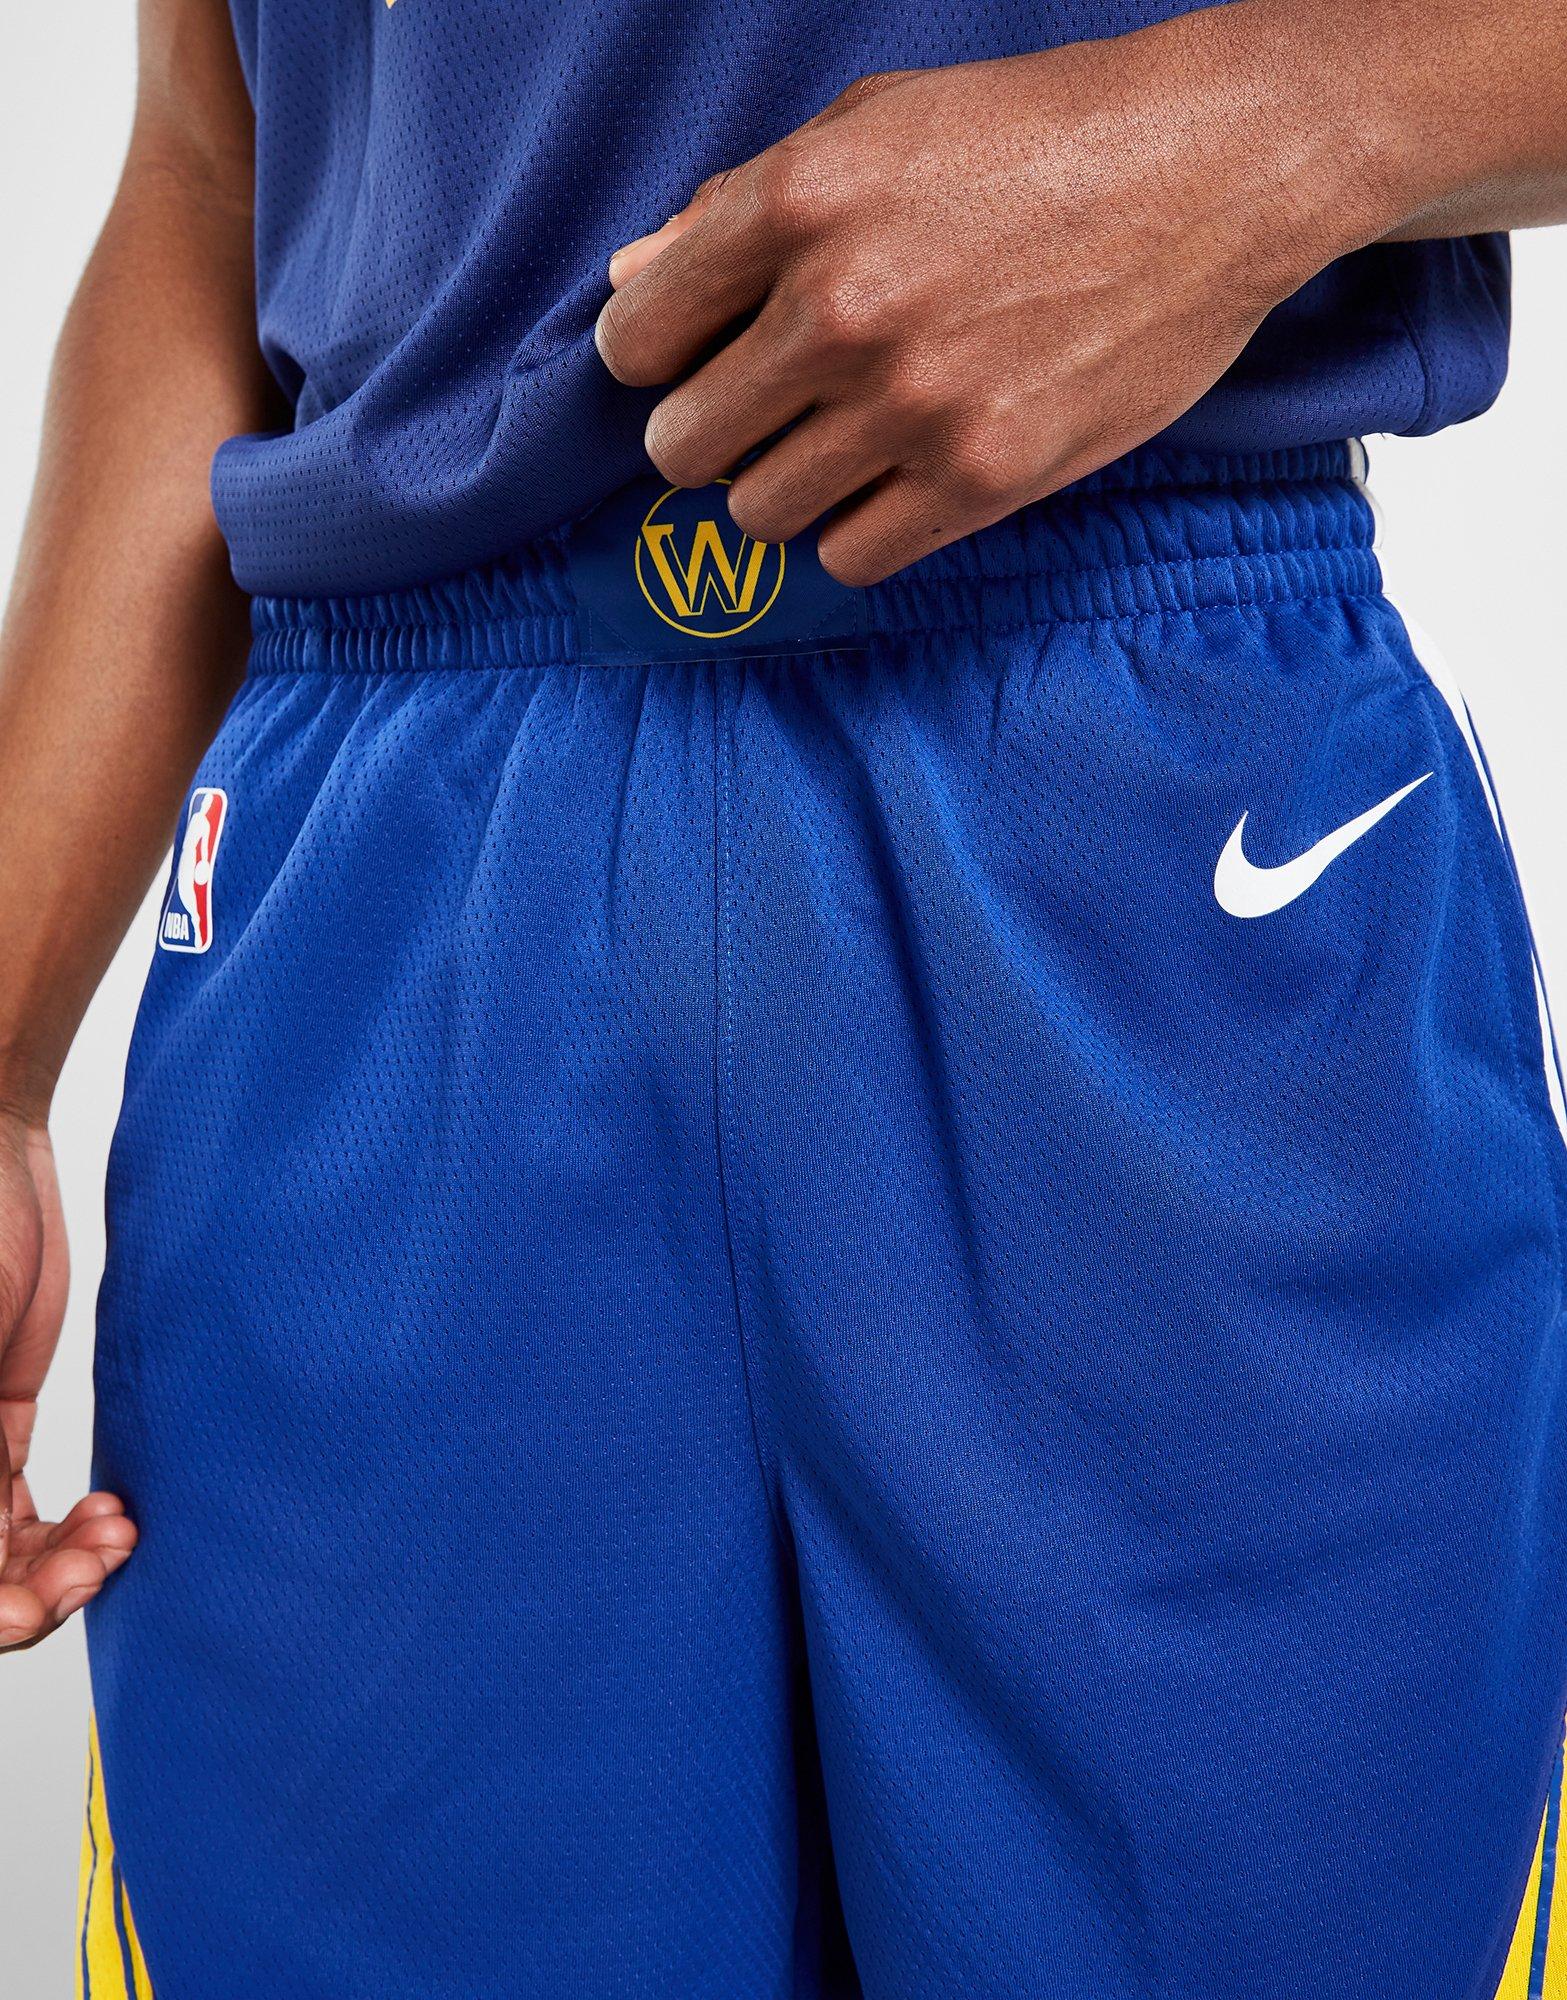 Nike NBA Golden State Warriors Swingman Shorts - White - Mens